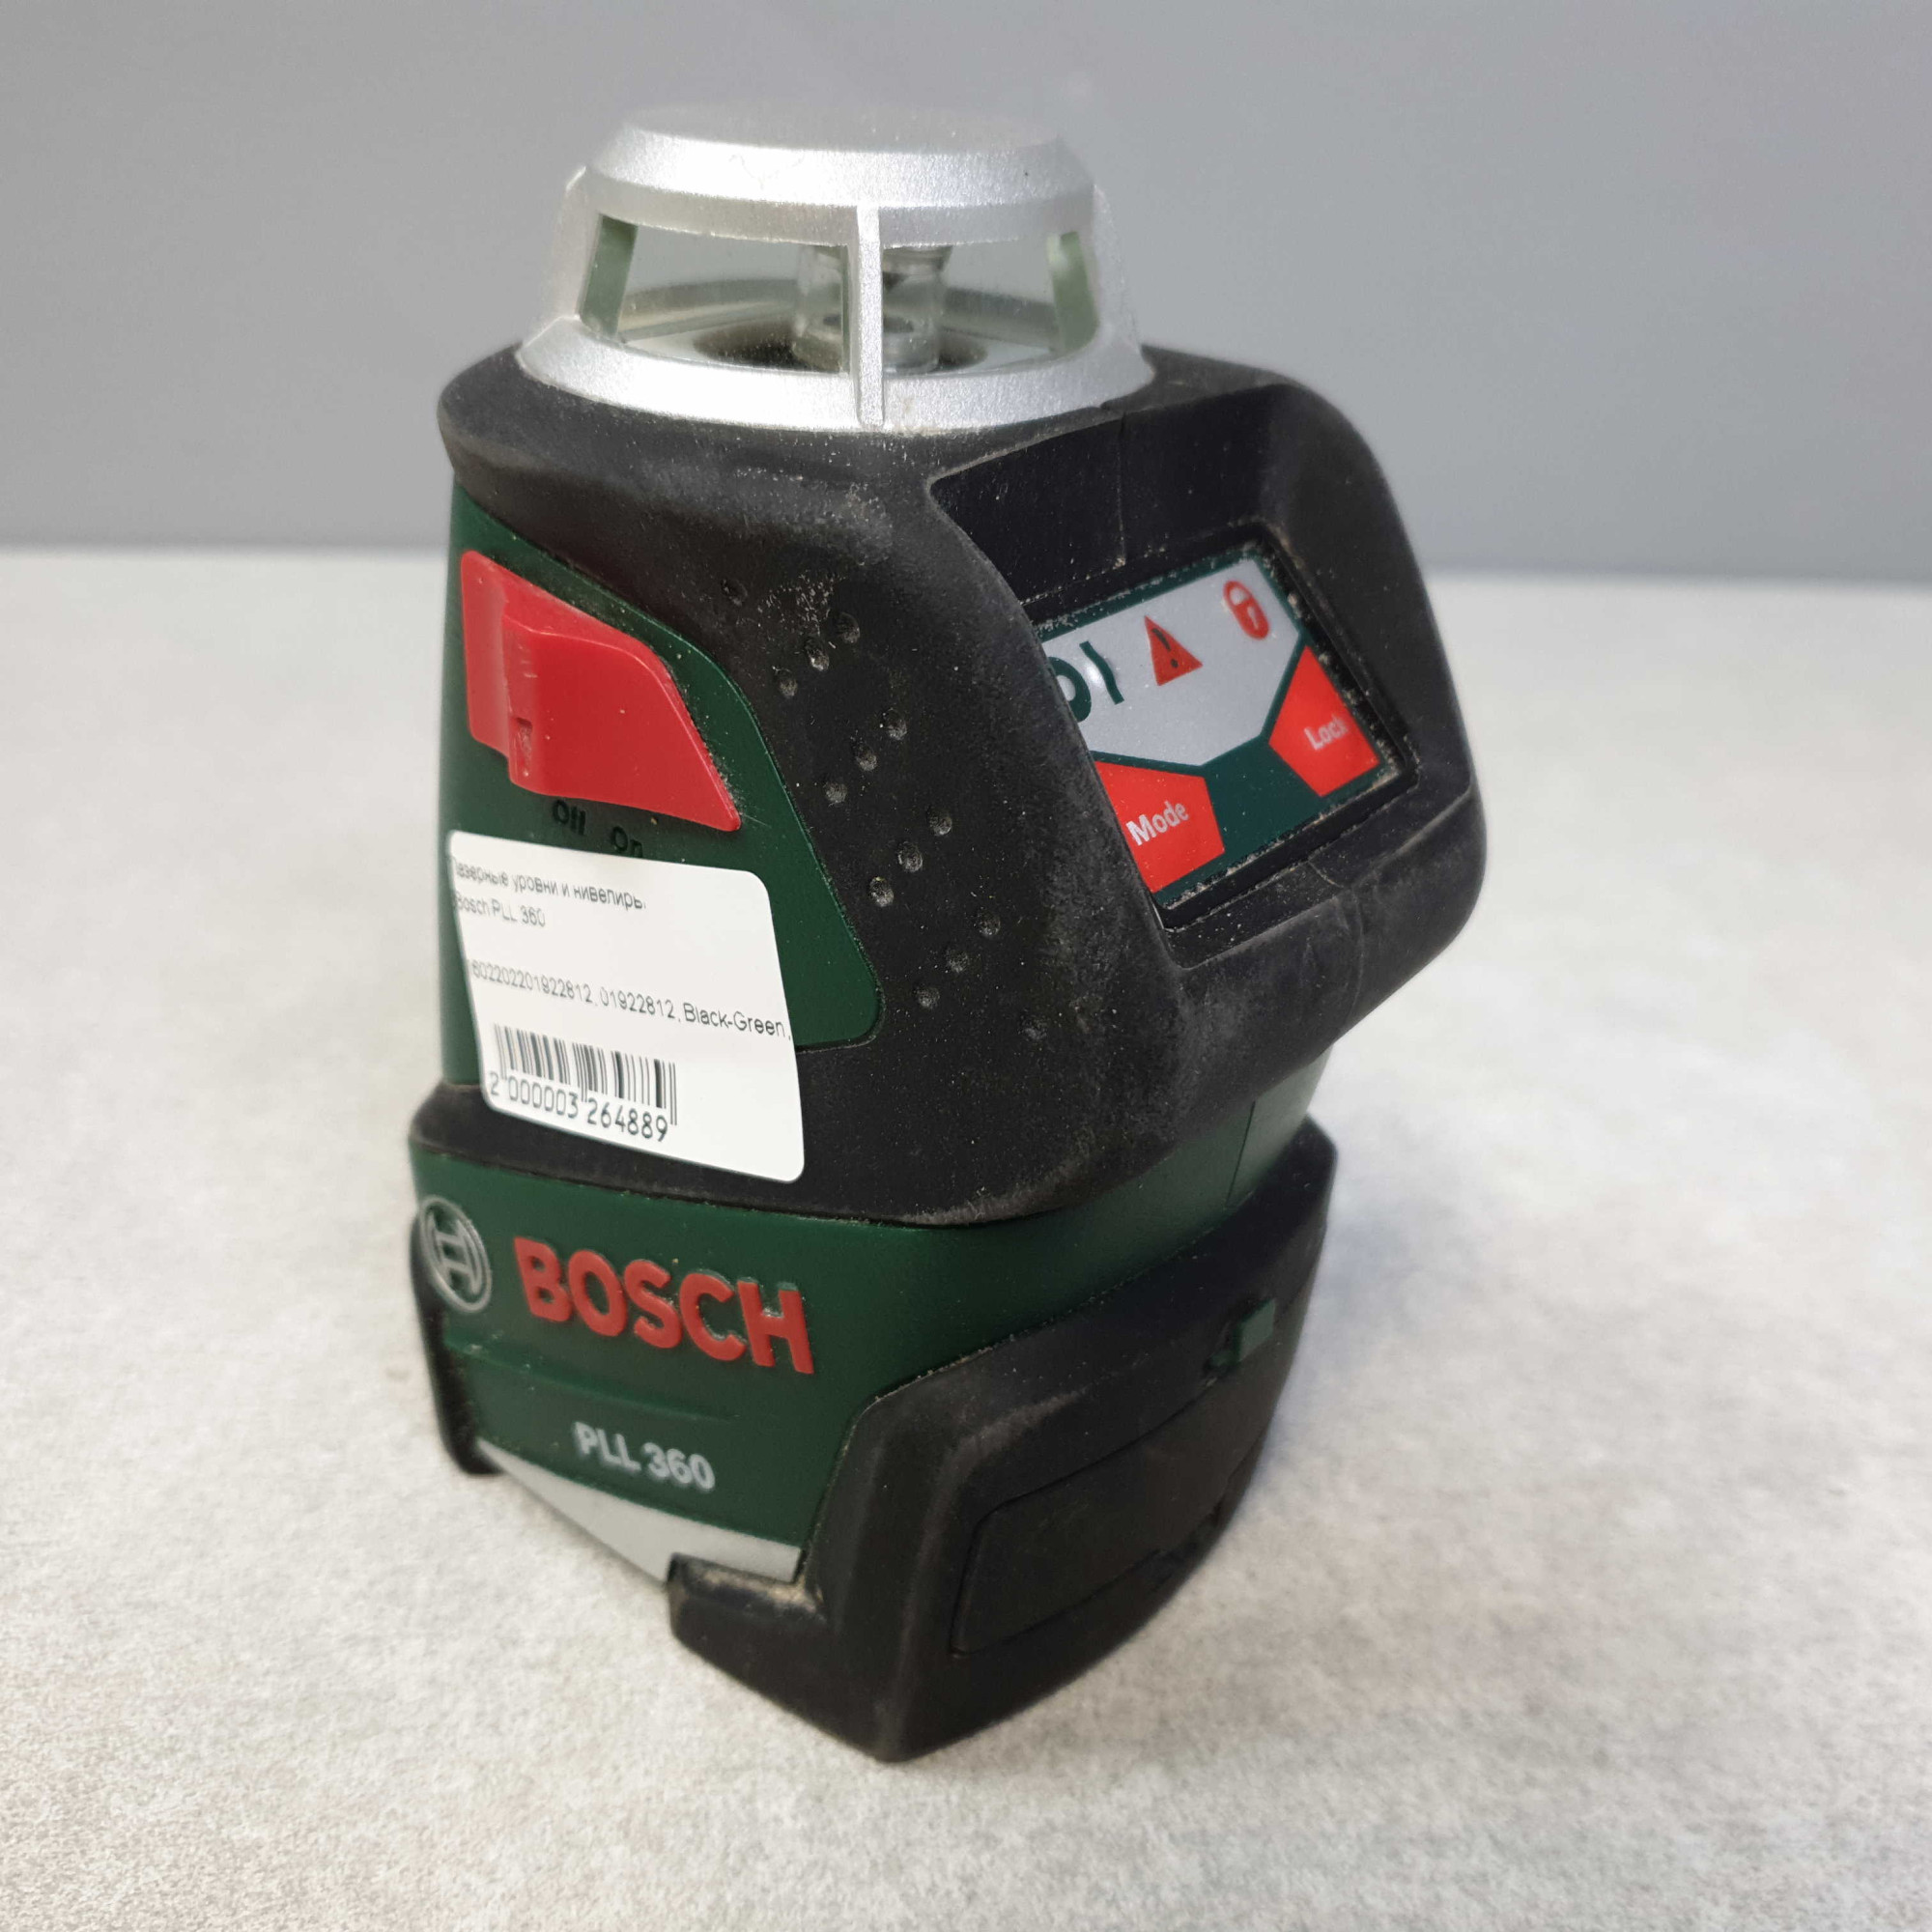 Лазерный нивелир Bosch PLL 360 0